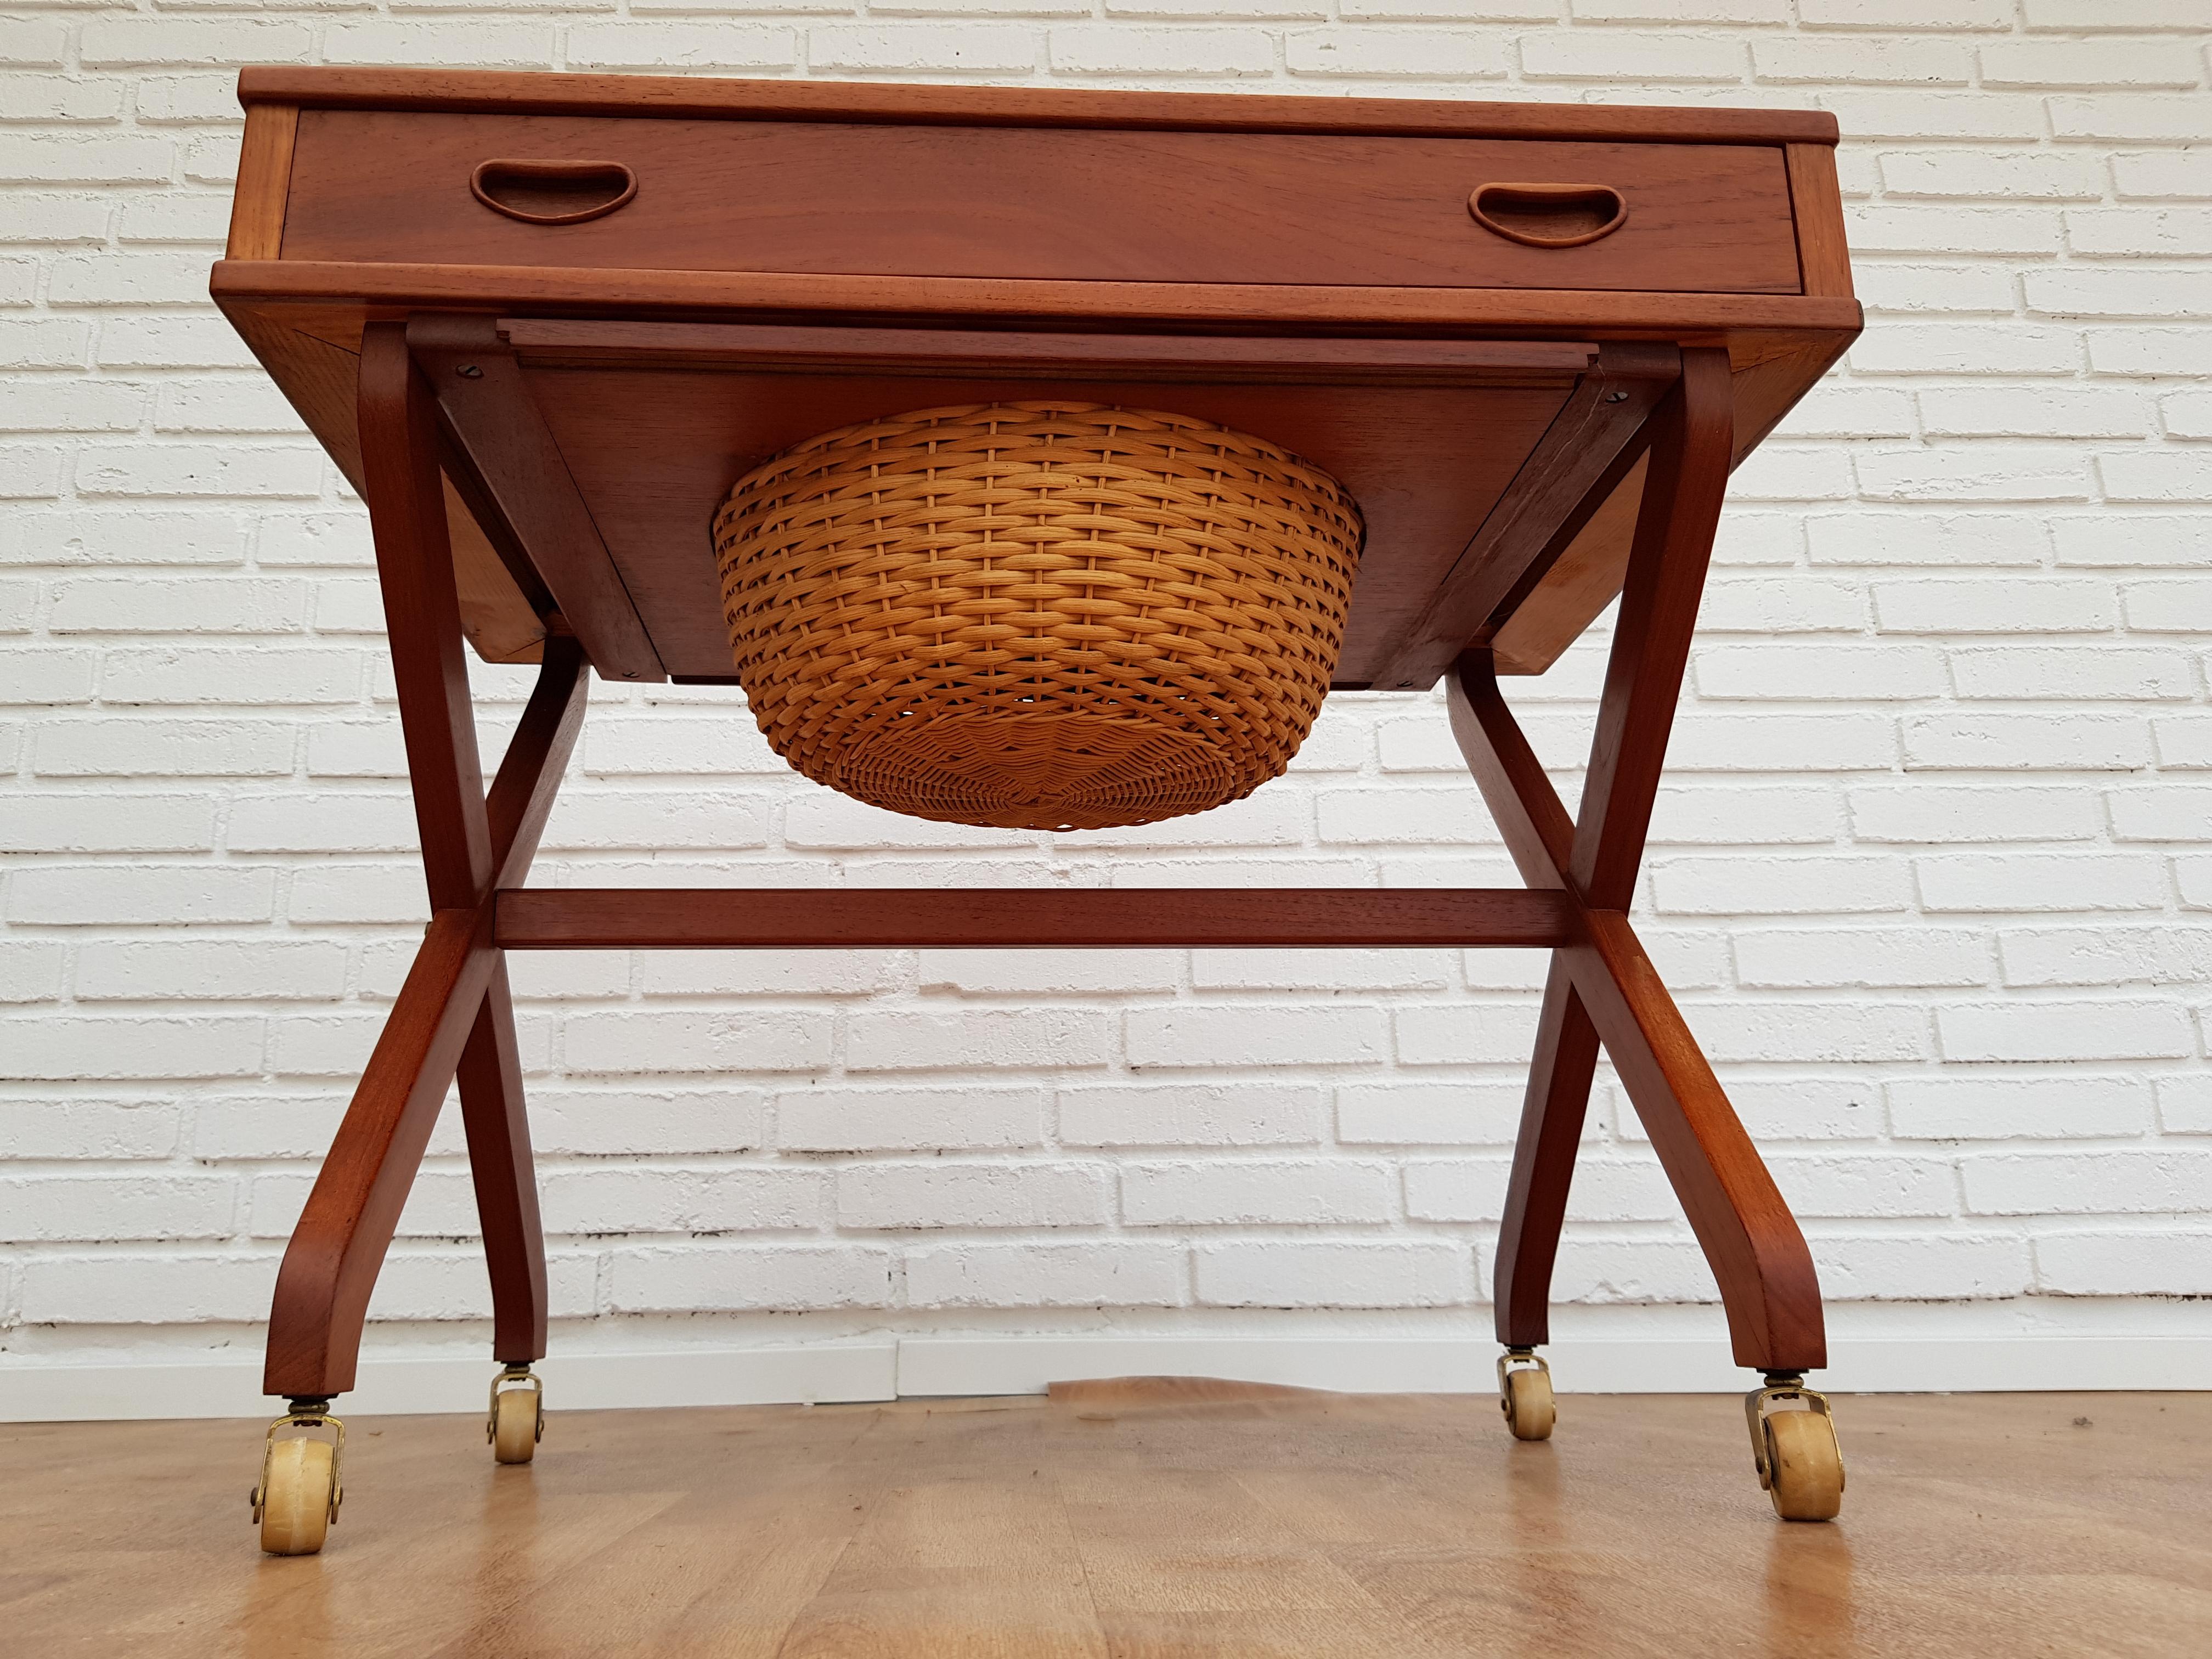 Vintage Danish Sewing Table, 1960s, Teak Wood, Rattan For Sale 1